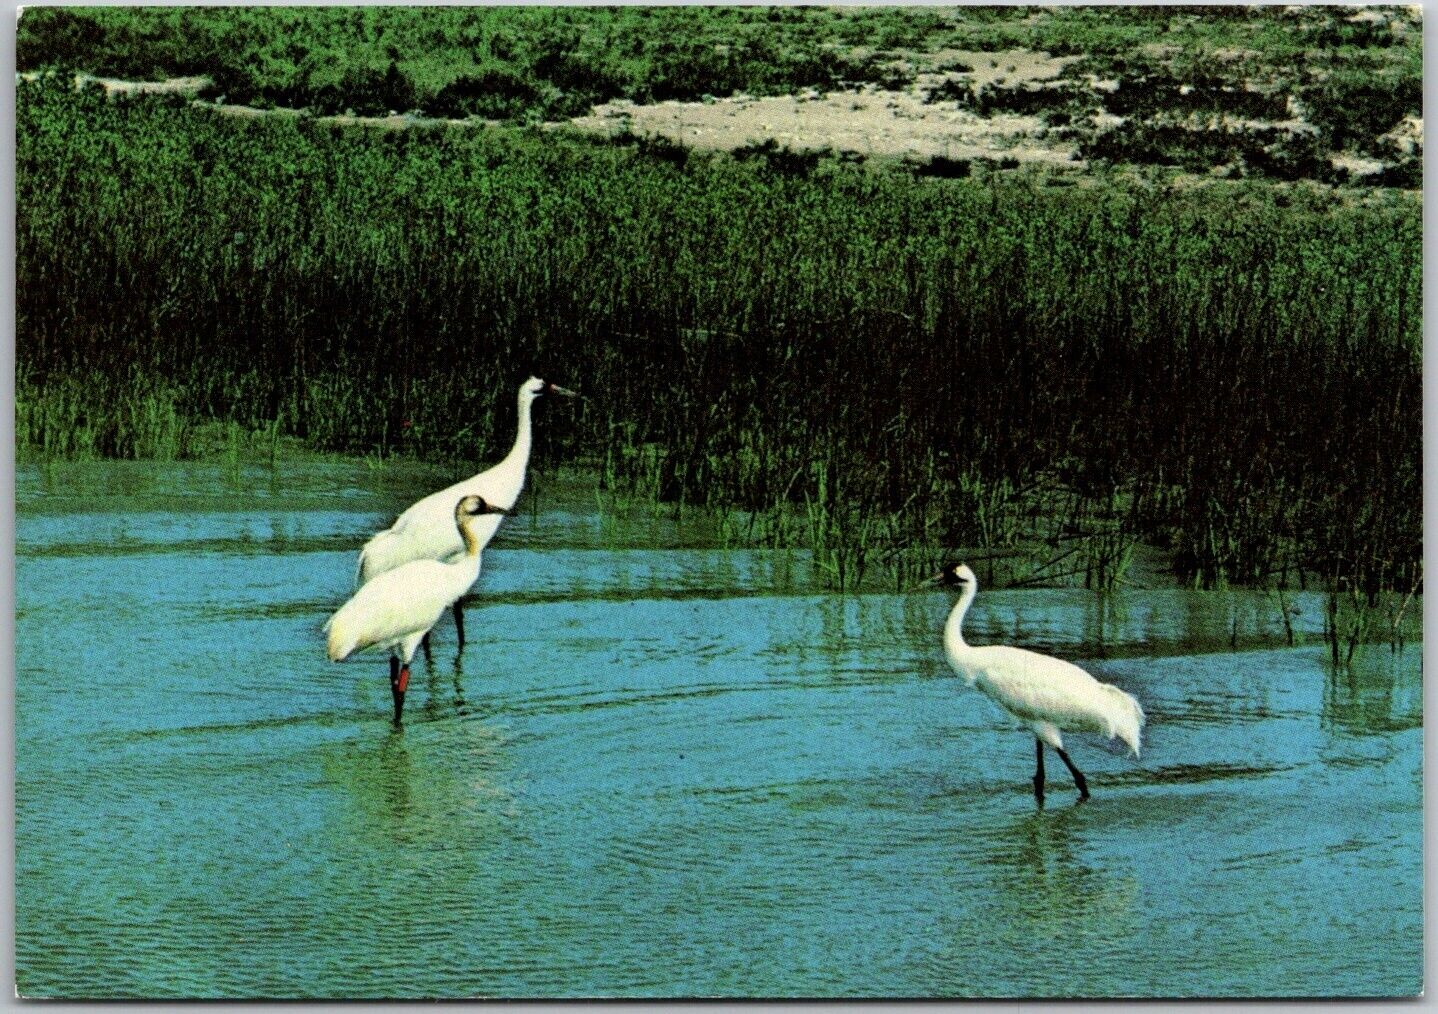 Postcard: Whooping Cranes at Aransas National Wildlife Refuge - Birdwatcher A186